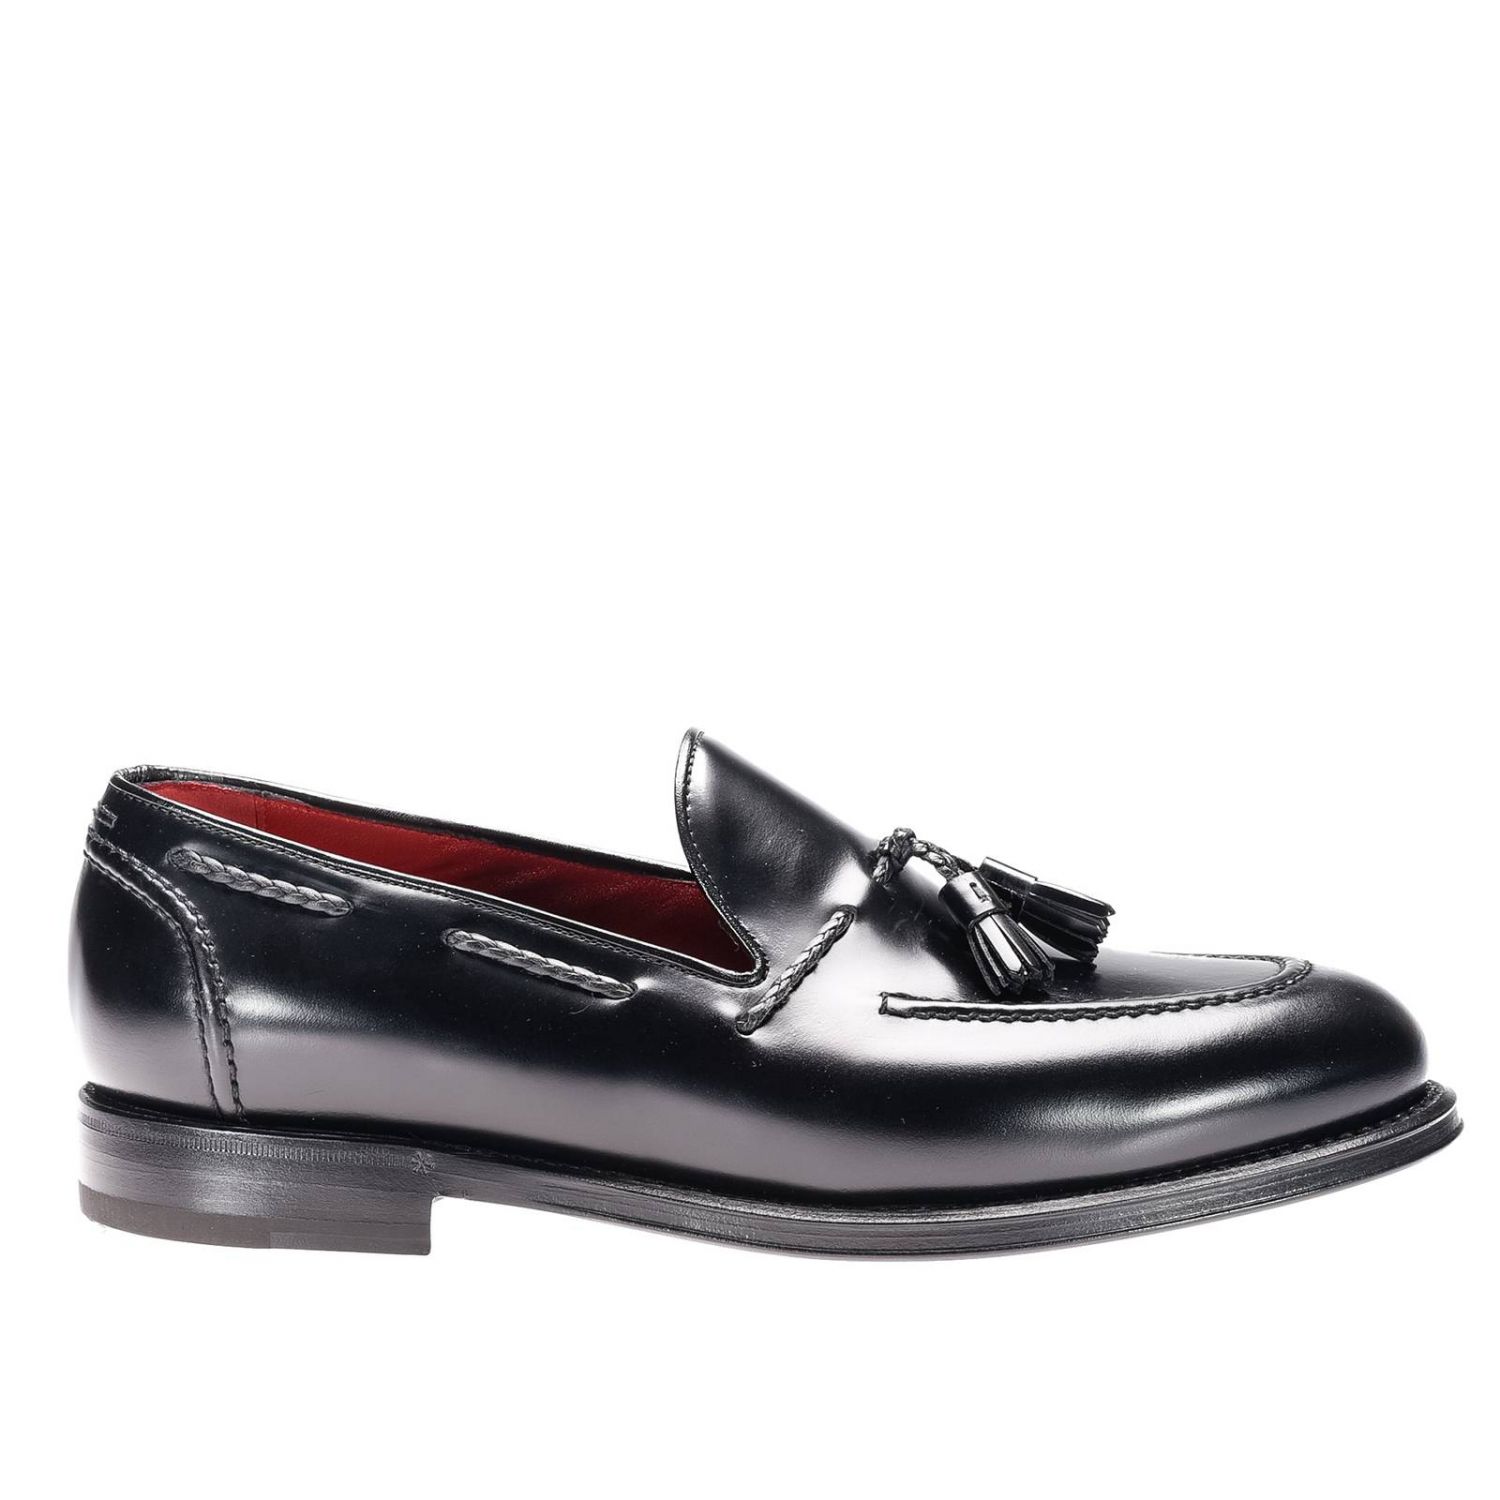 Barrett Outlet: Shoes men - Black | Loafers Barrett 142u149 GIGLIO.COM